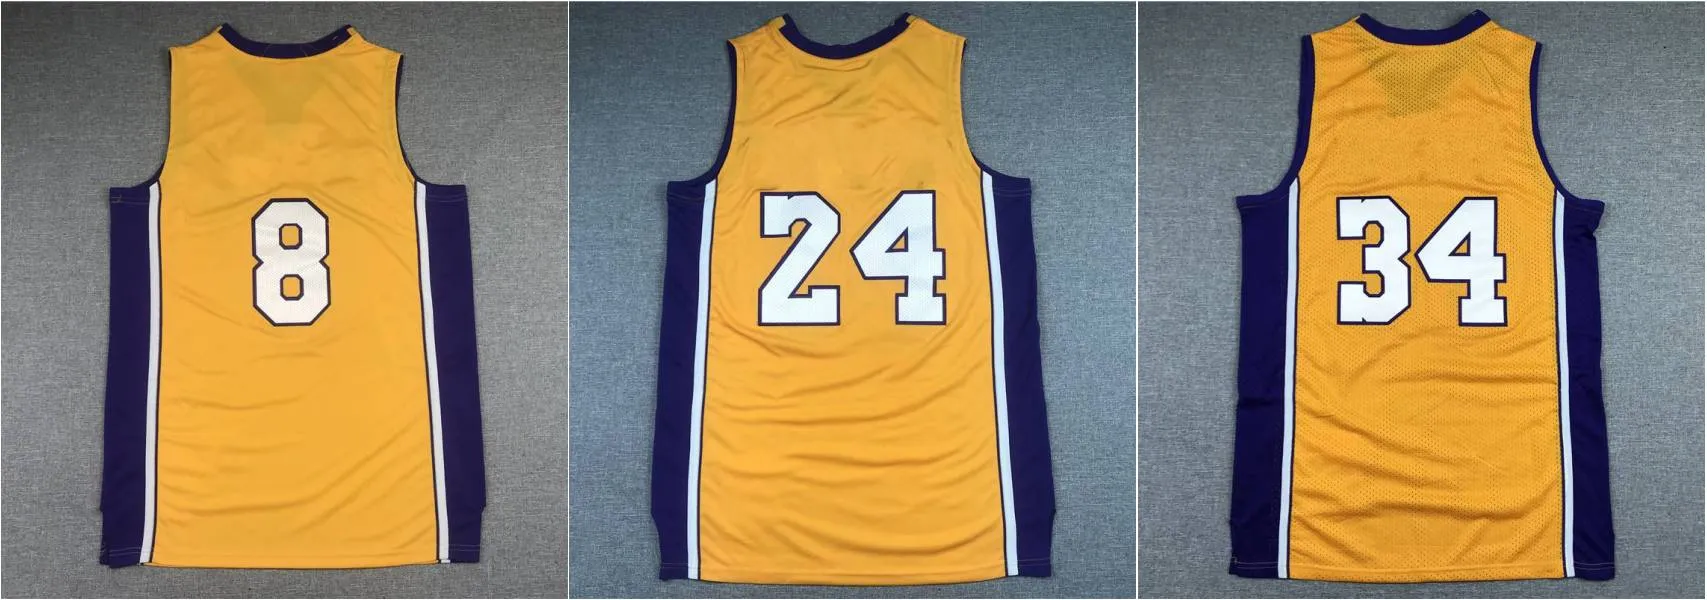 Camiseta Lakers James - CBDeportes